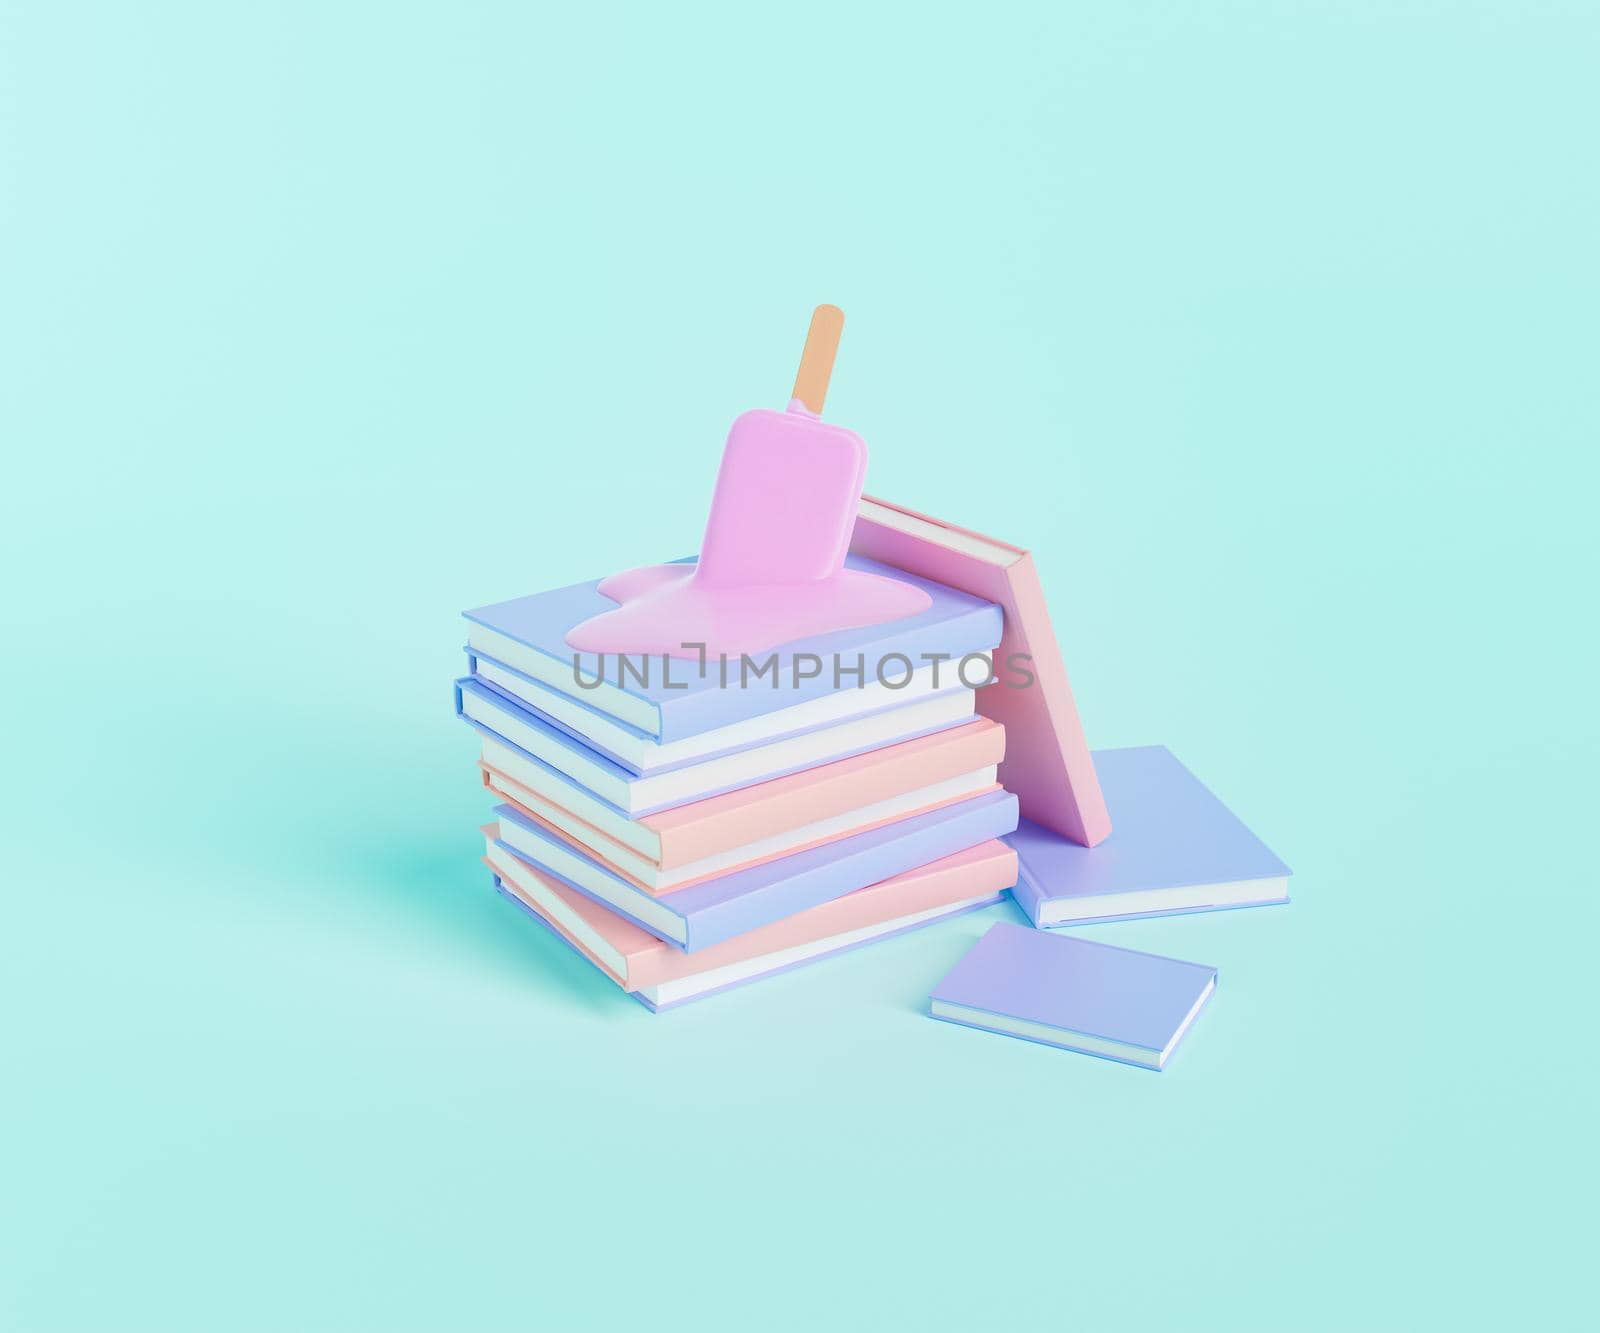 Ice cream melting on stack of notebooks by asolano